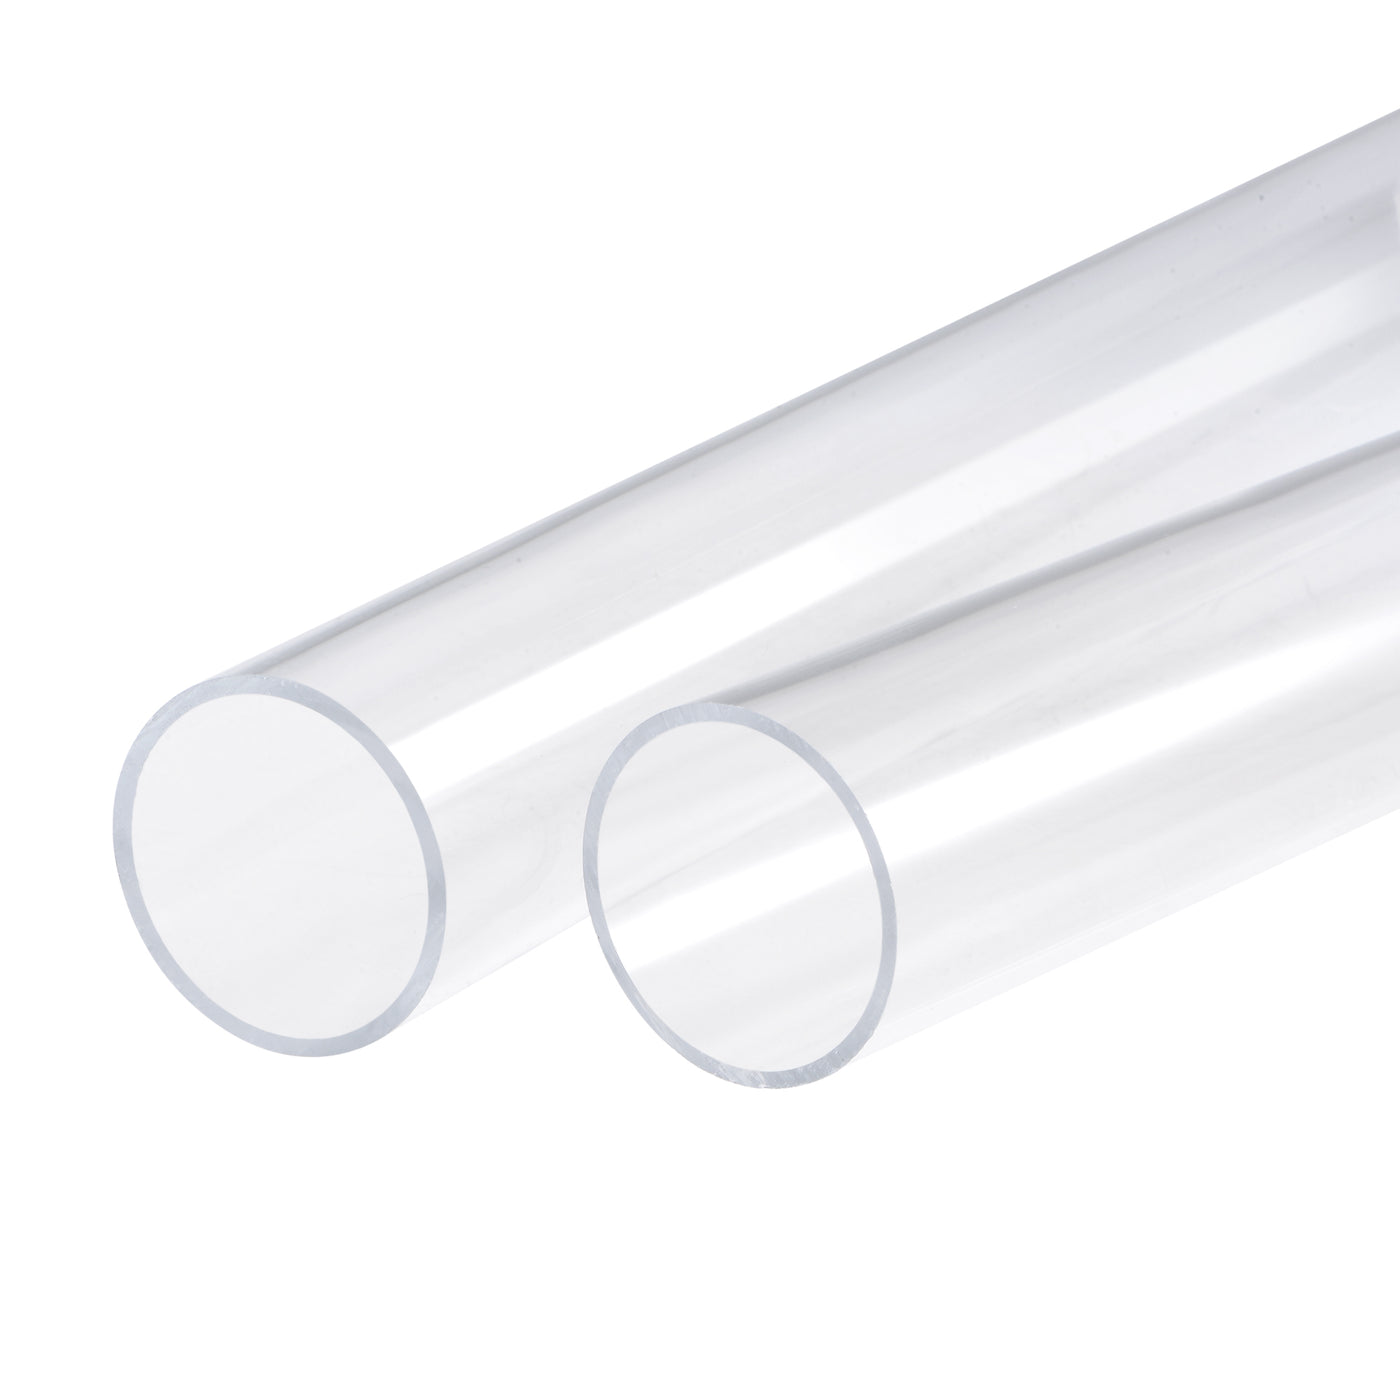 Harfington Acrylic Pipe Rigid Round Tubes High Impact for Lighting, Models, Plumbing, Crafts